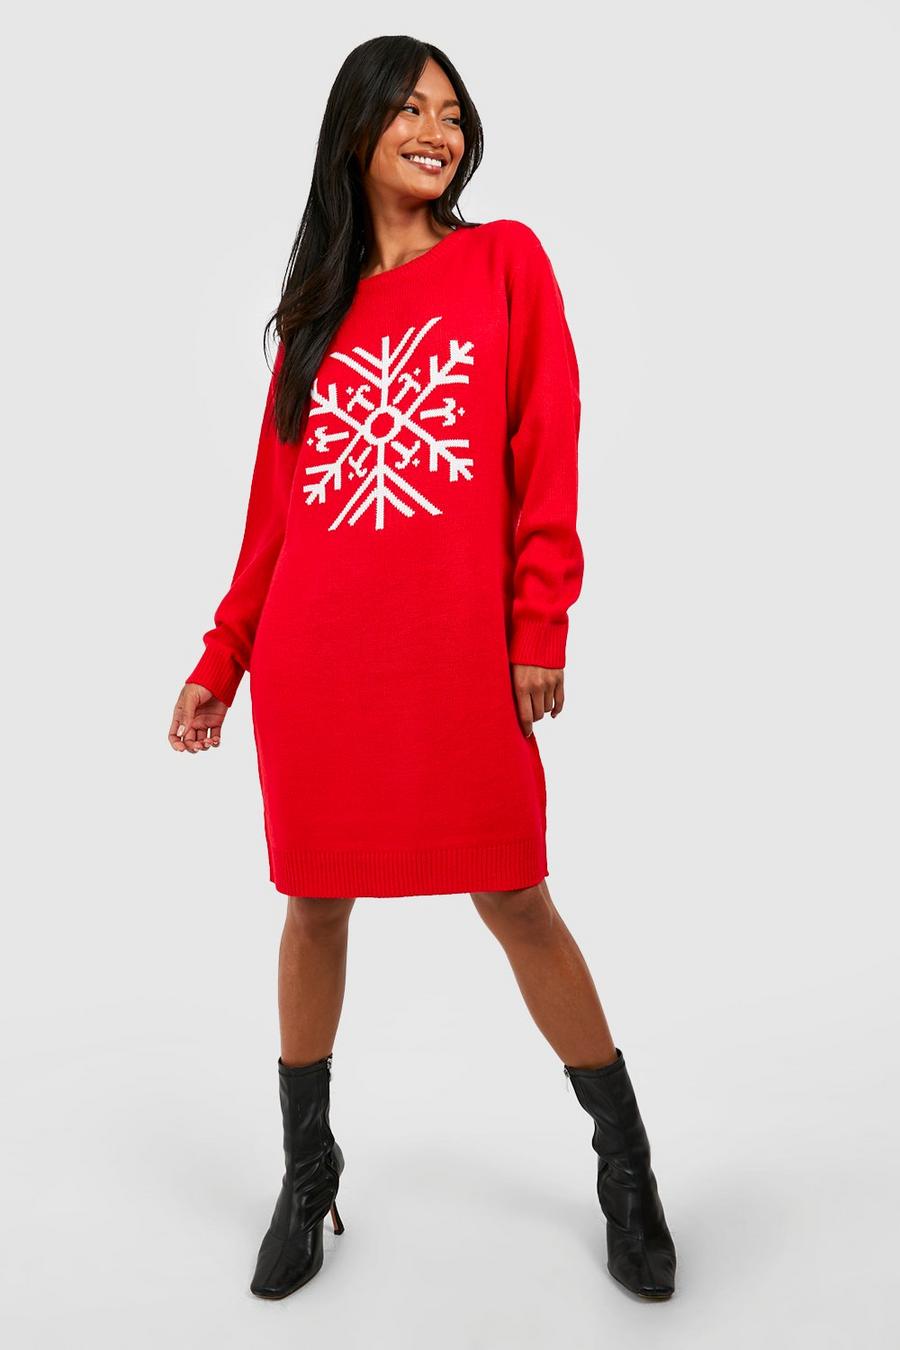 Red Snowflake Chirstmas Sweater Dress